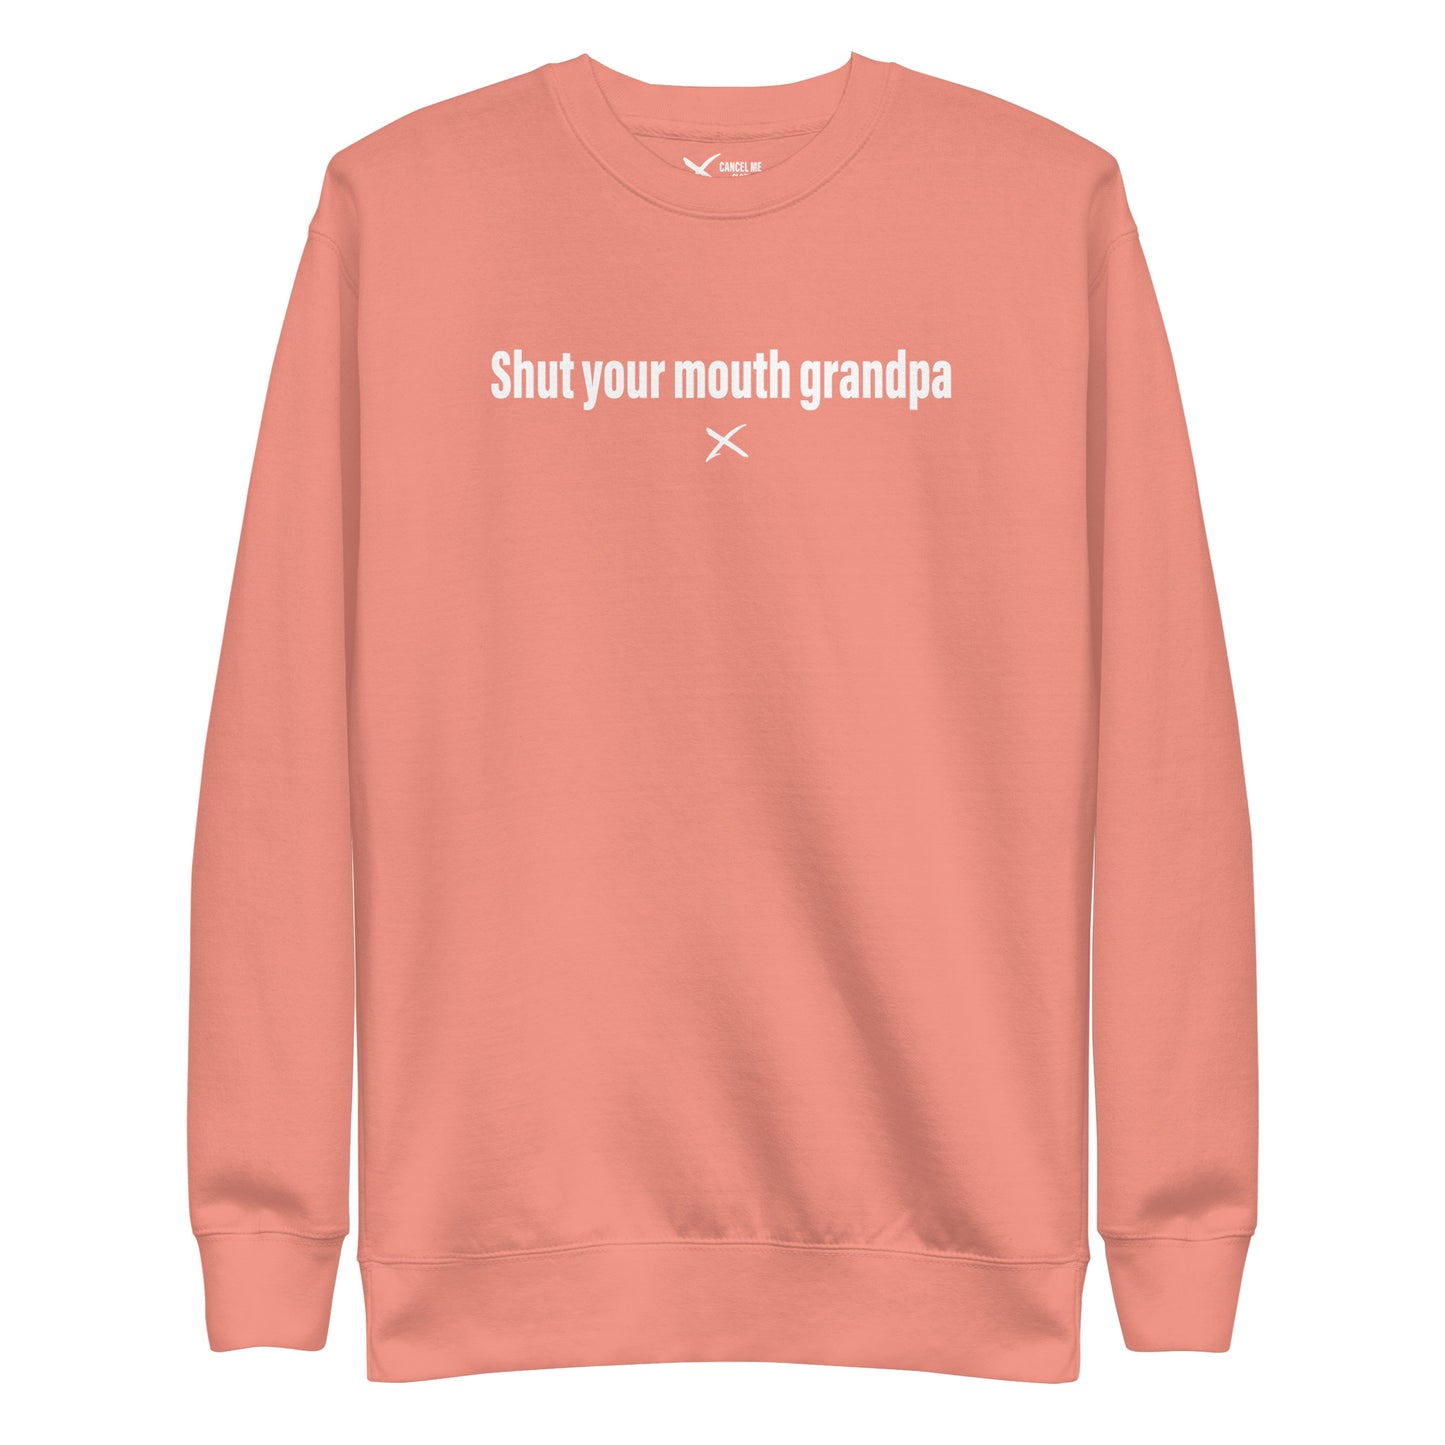 Shut your mouth grandpa - Sweatshirt